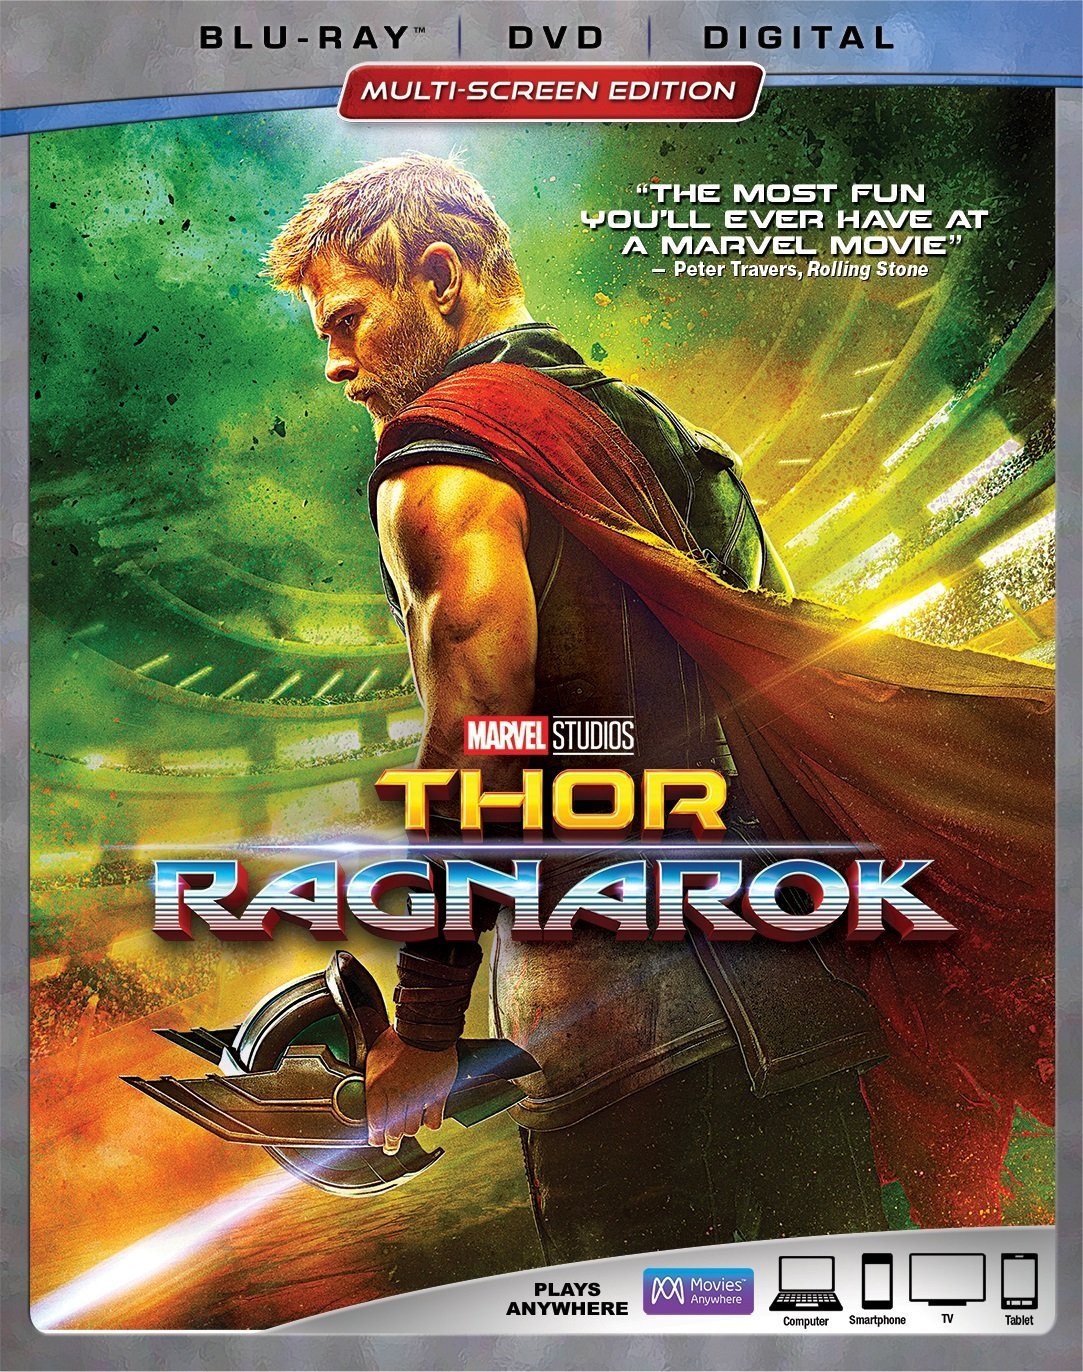 Thor: Ragnarok on Blu-ray